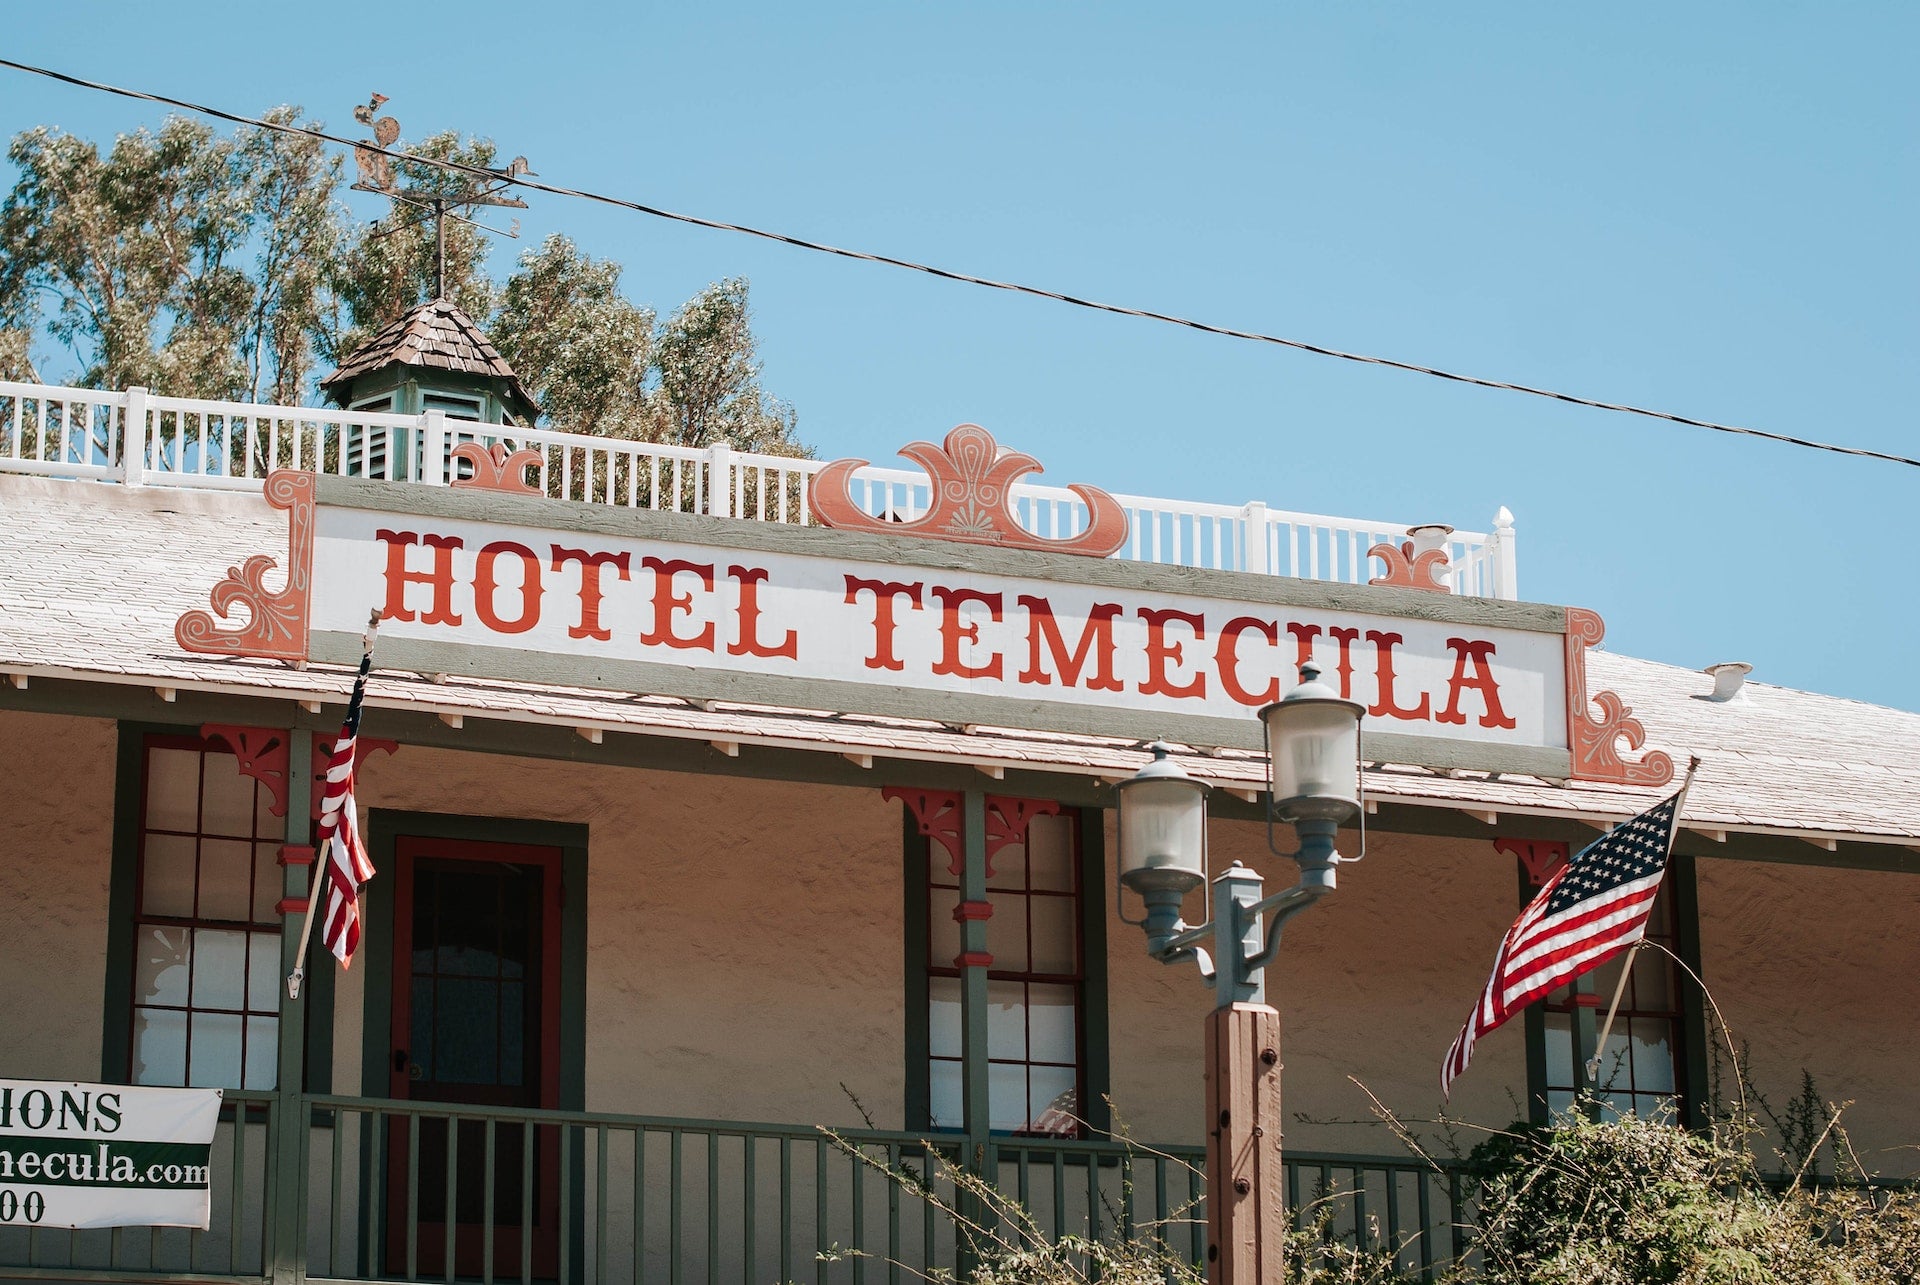 Hotel Temecula western style sign.